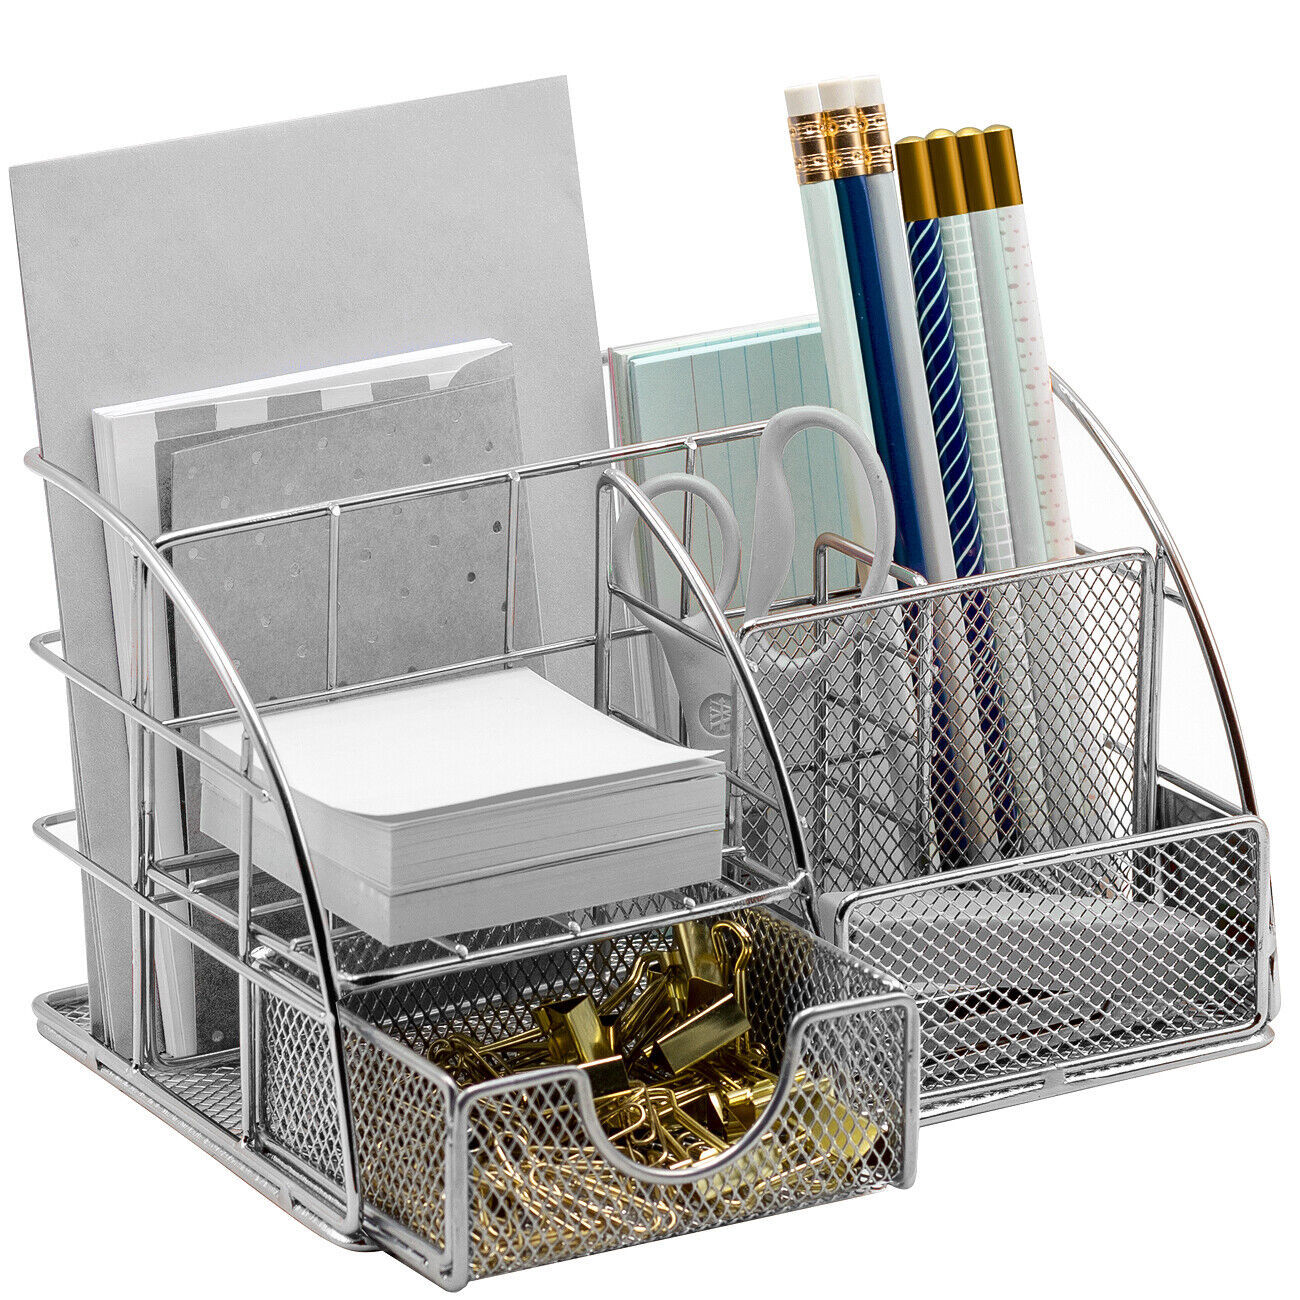 Primary image for Office Desk Organizer for Supplies & Accessories - Mesh Desktop Organization